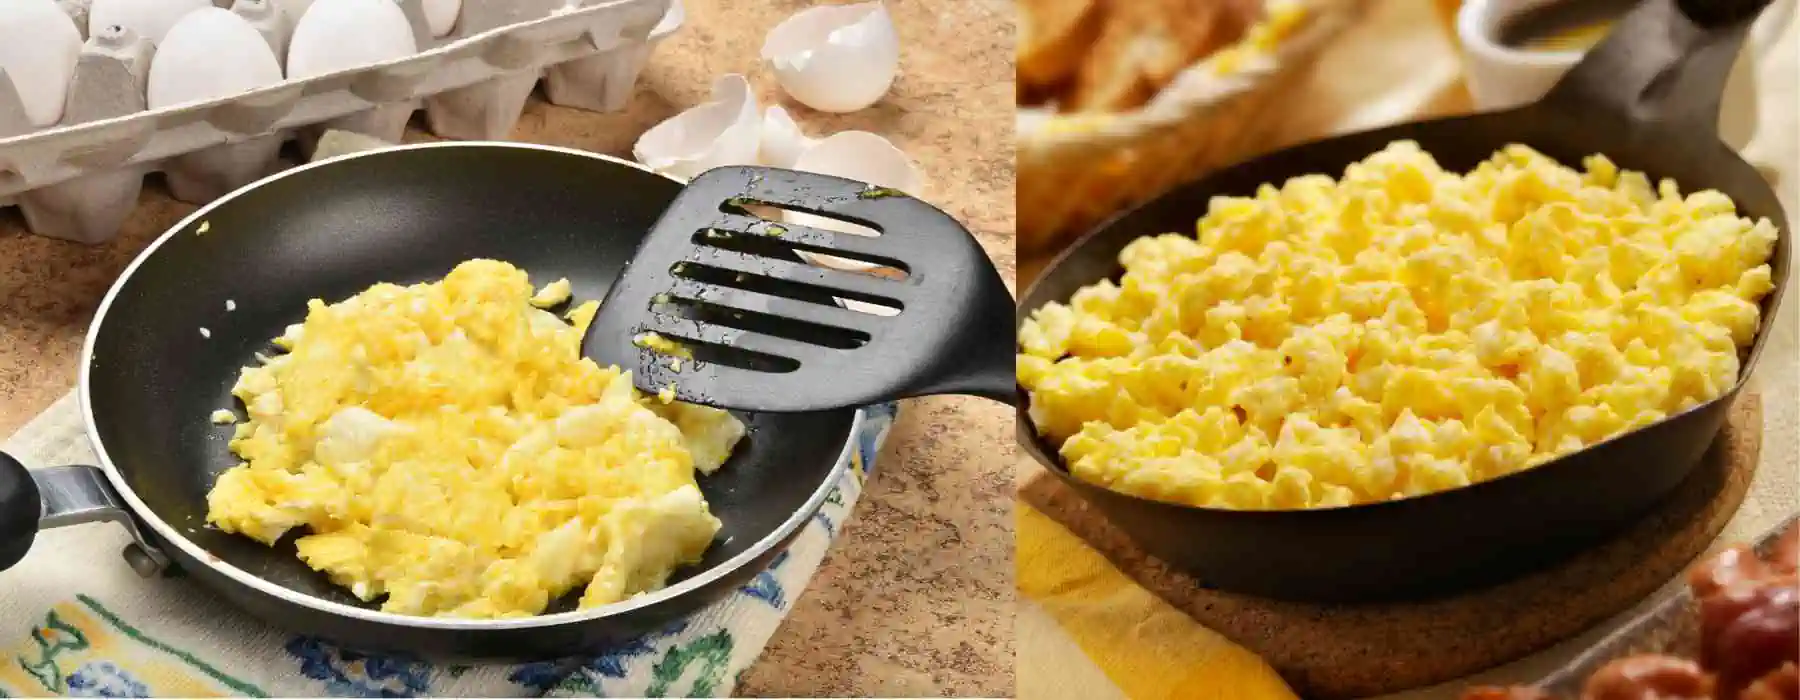 Скрэмбл - классический завтрак с яичницей